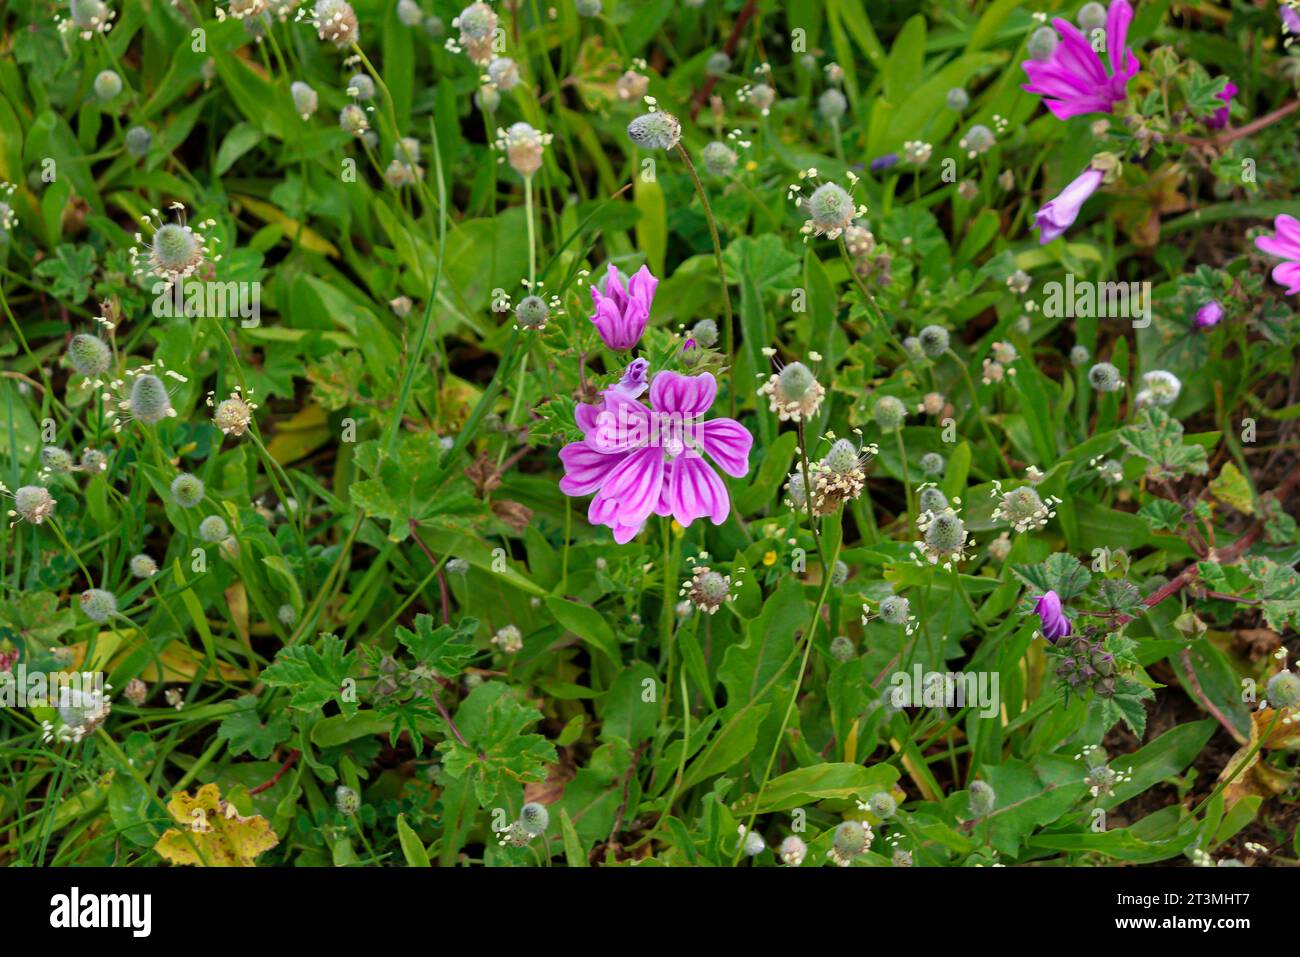 Malva sylvestris lila Blume Nahaufnahme in einem grünen, üppigen Feld Stockfoto